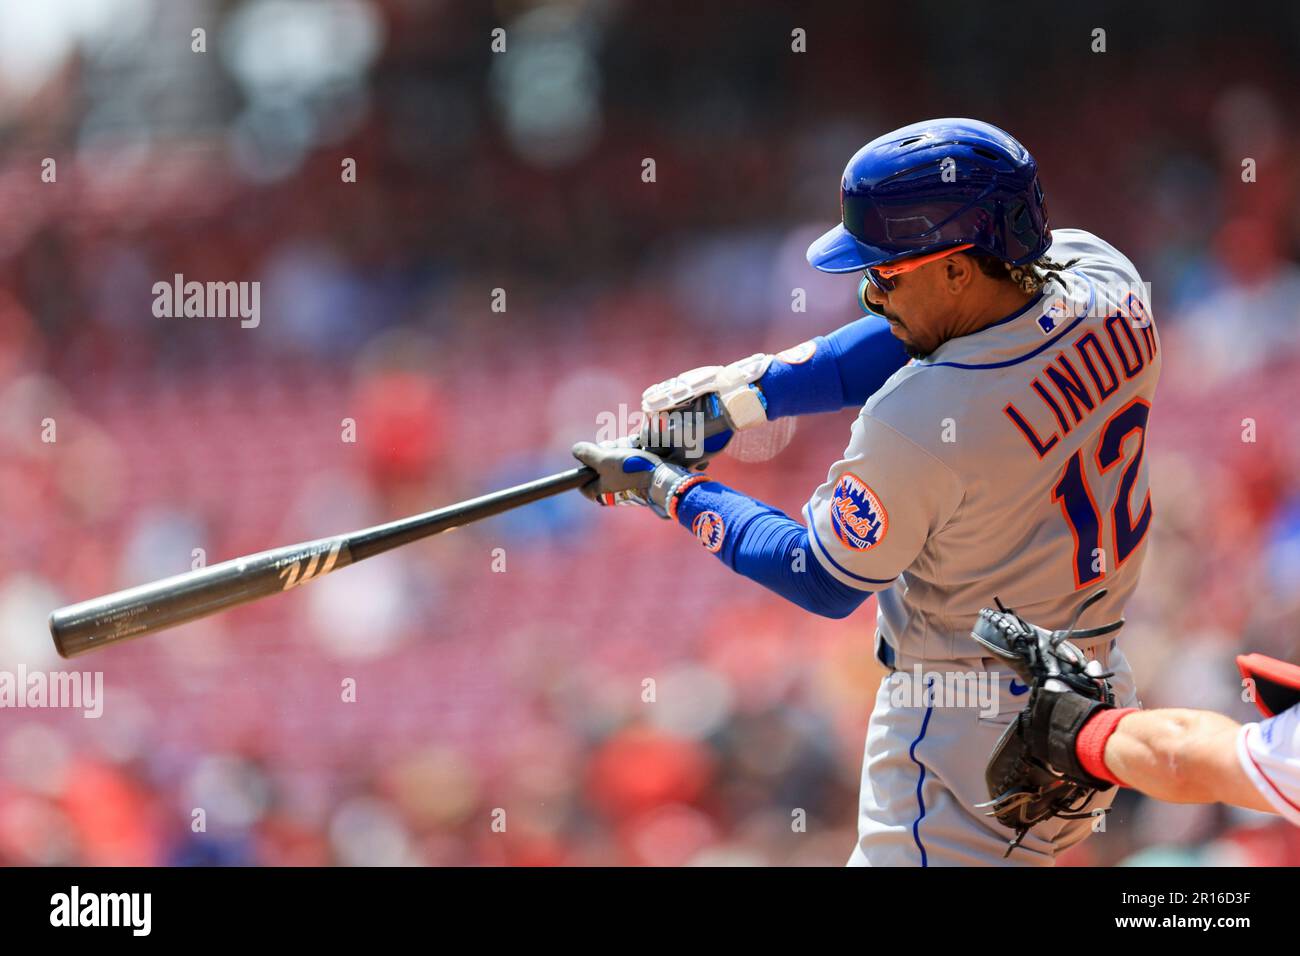 New York Mets' Francisco Lindor bats during a baseball game